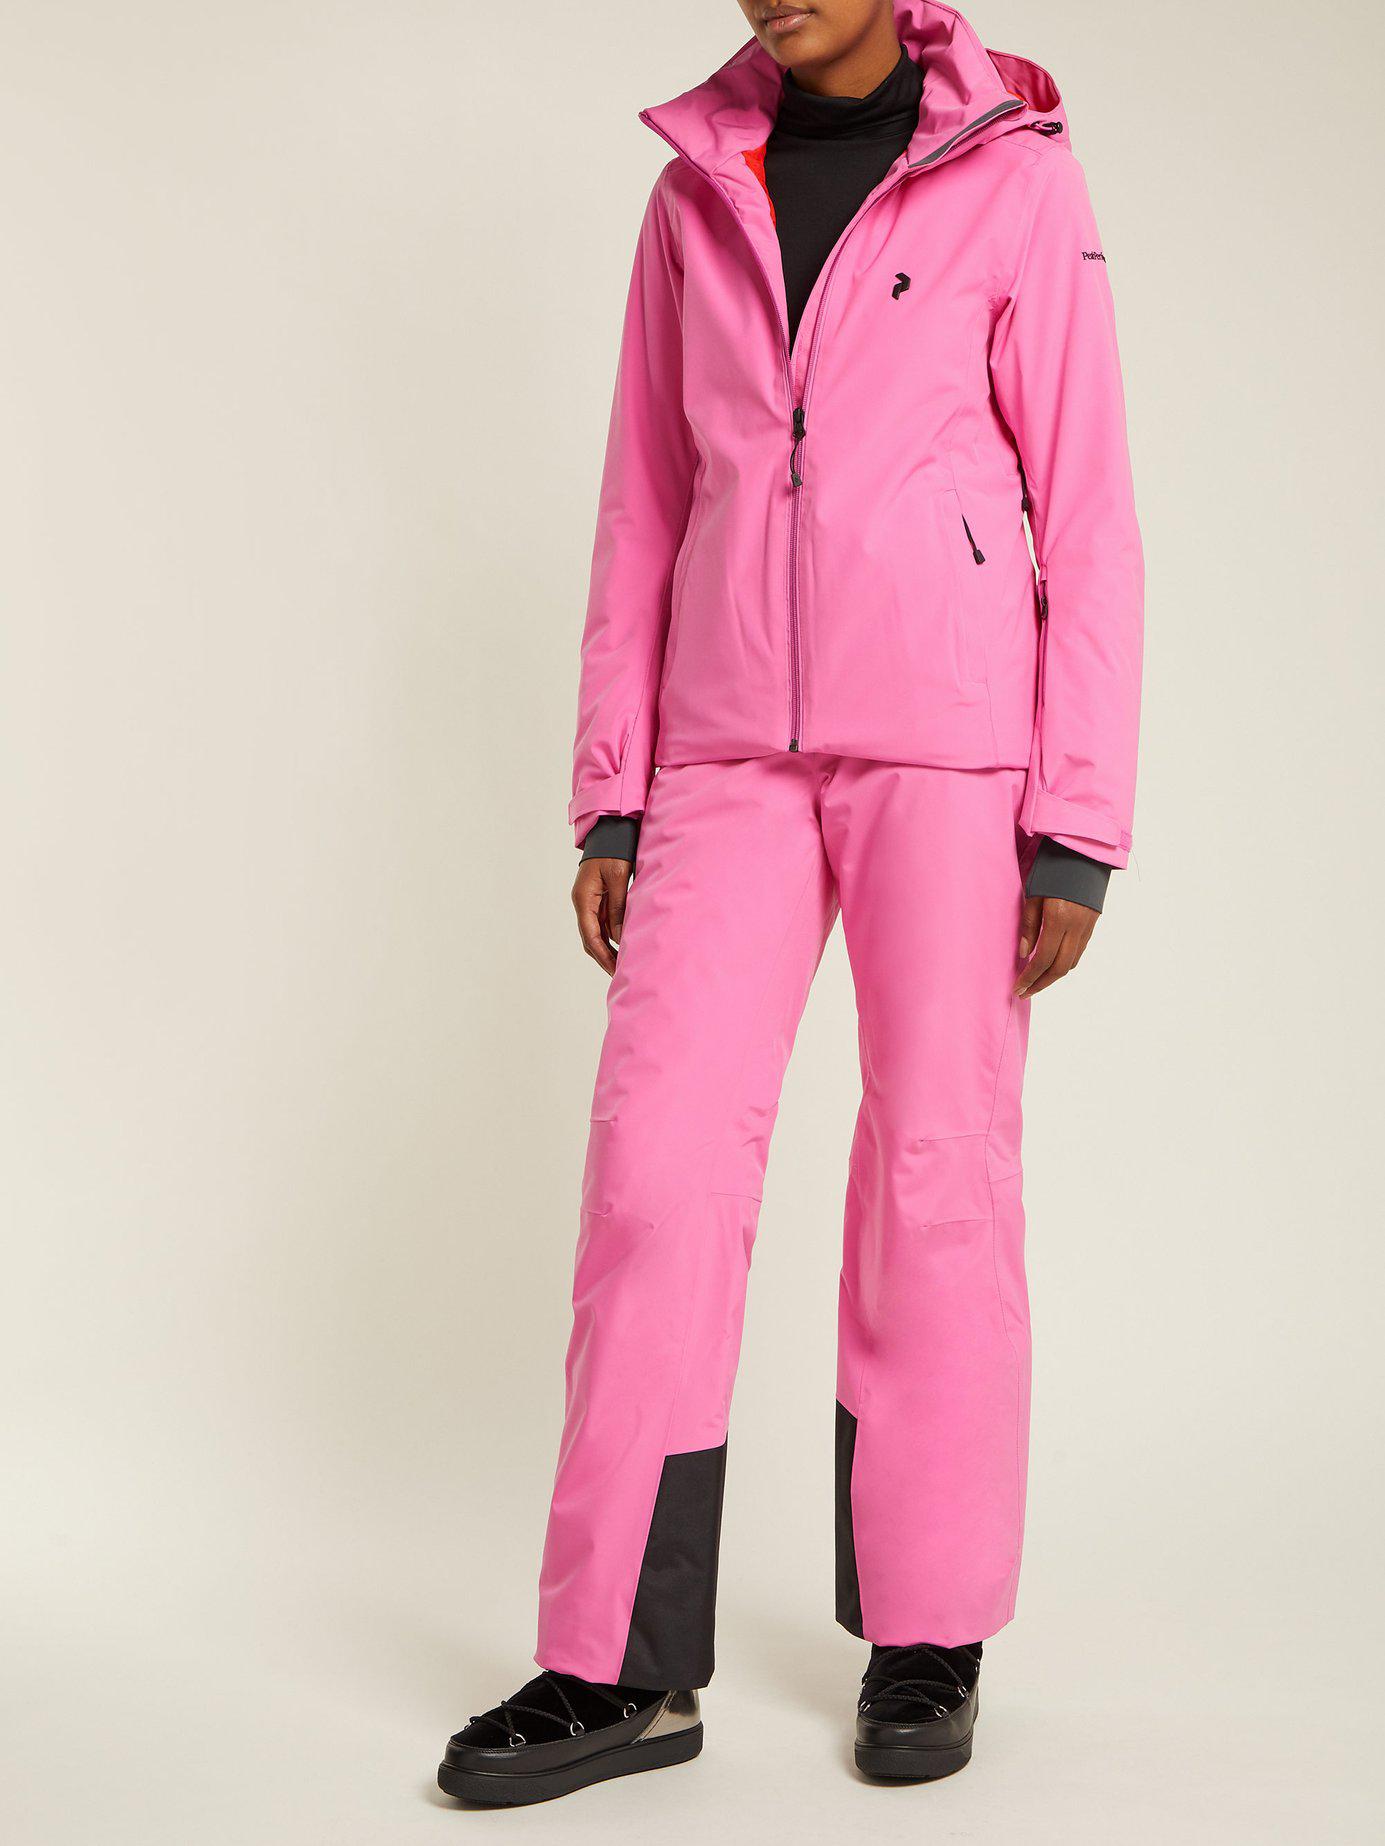 Peak Performance Anima Ski Jacket in Pink - Lyst